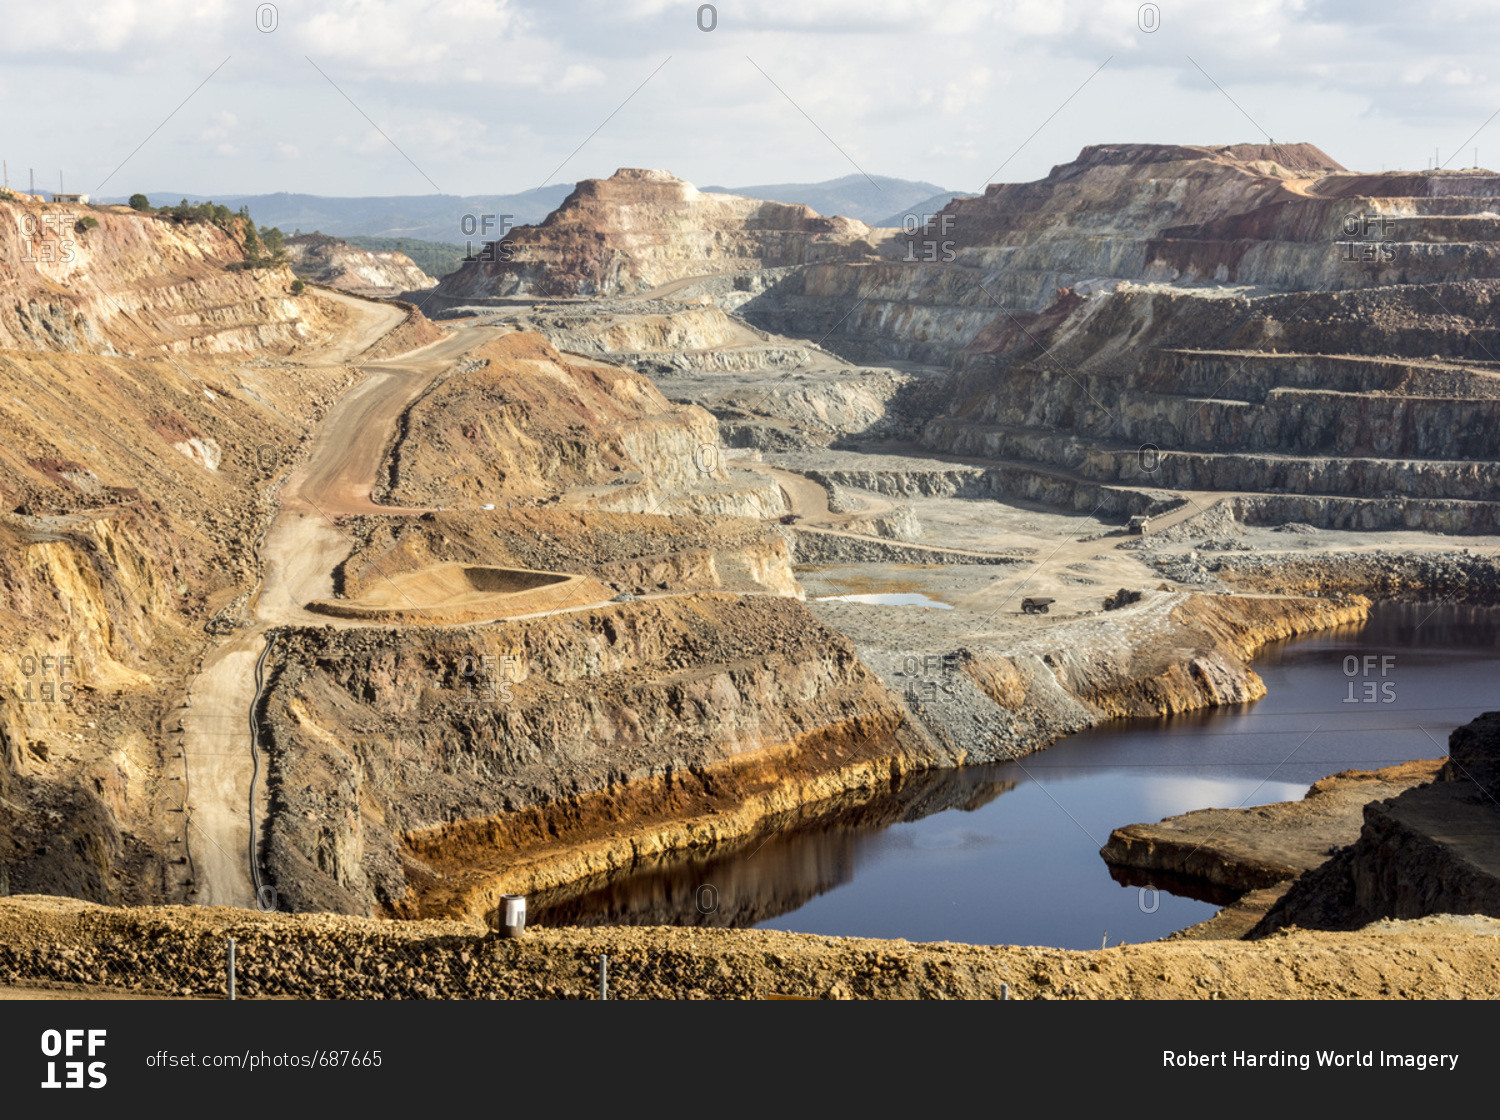 Main open-pit copper-sulfur mine at Rio Tinto, Huelva, Southwest Spain, Europe